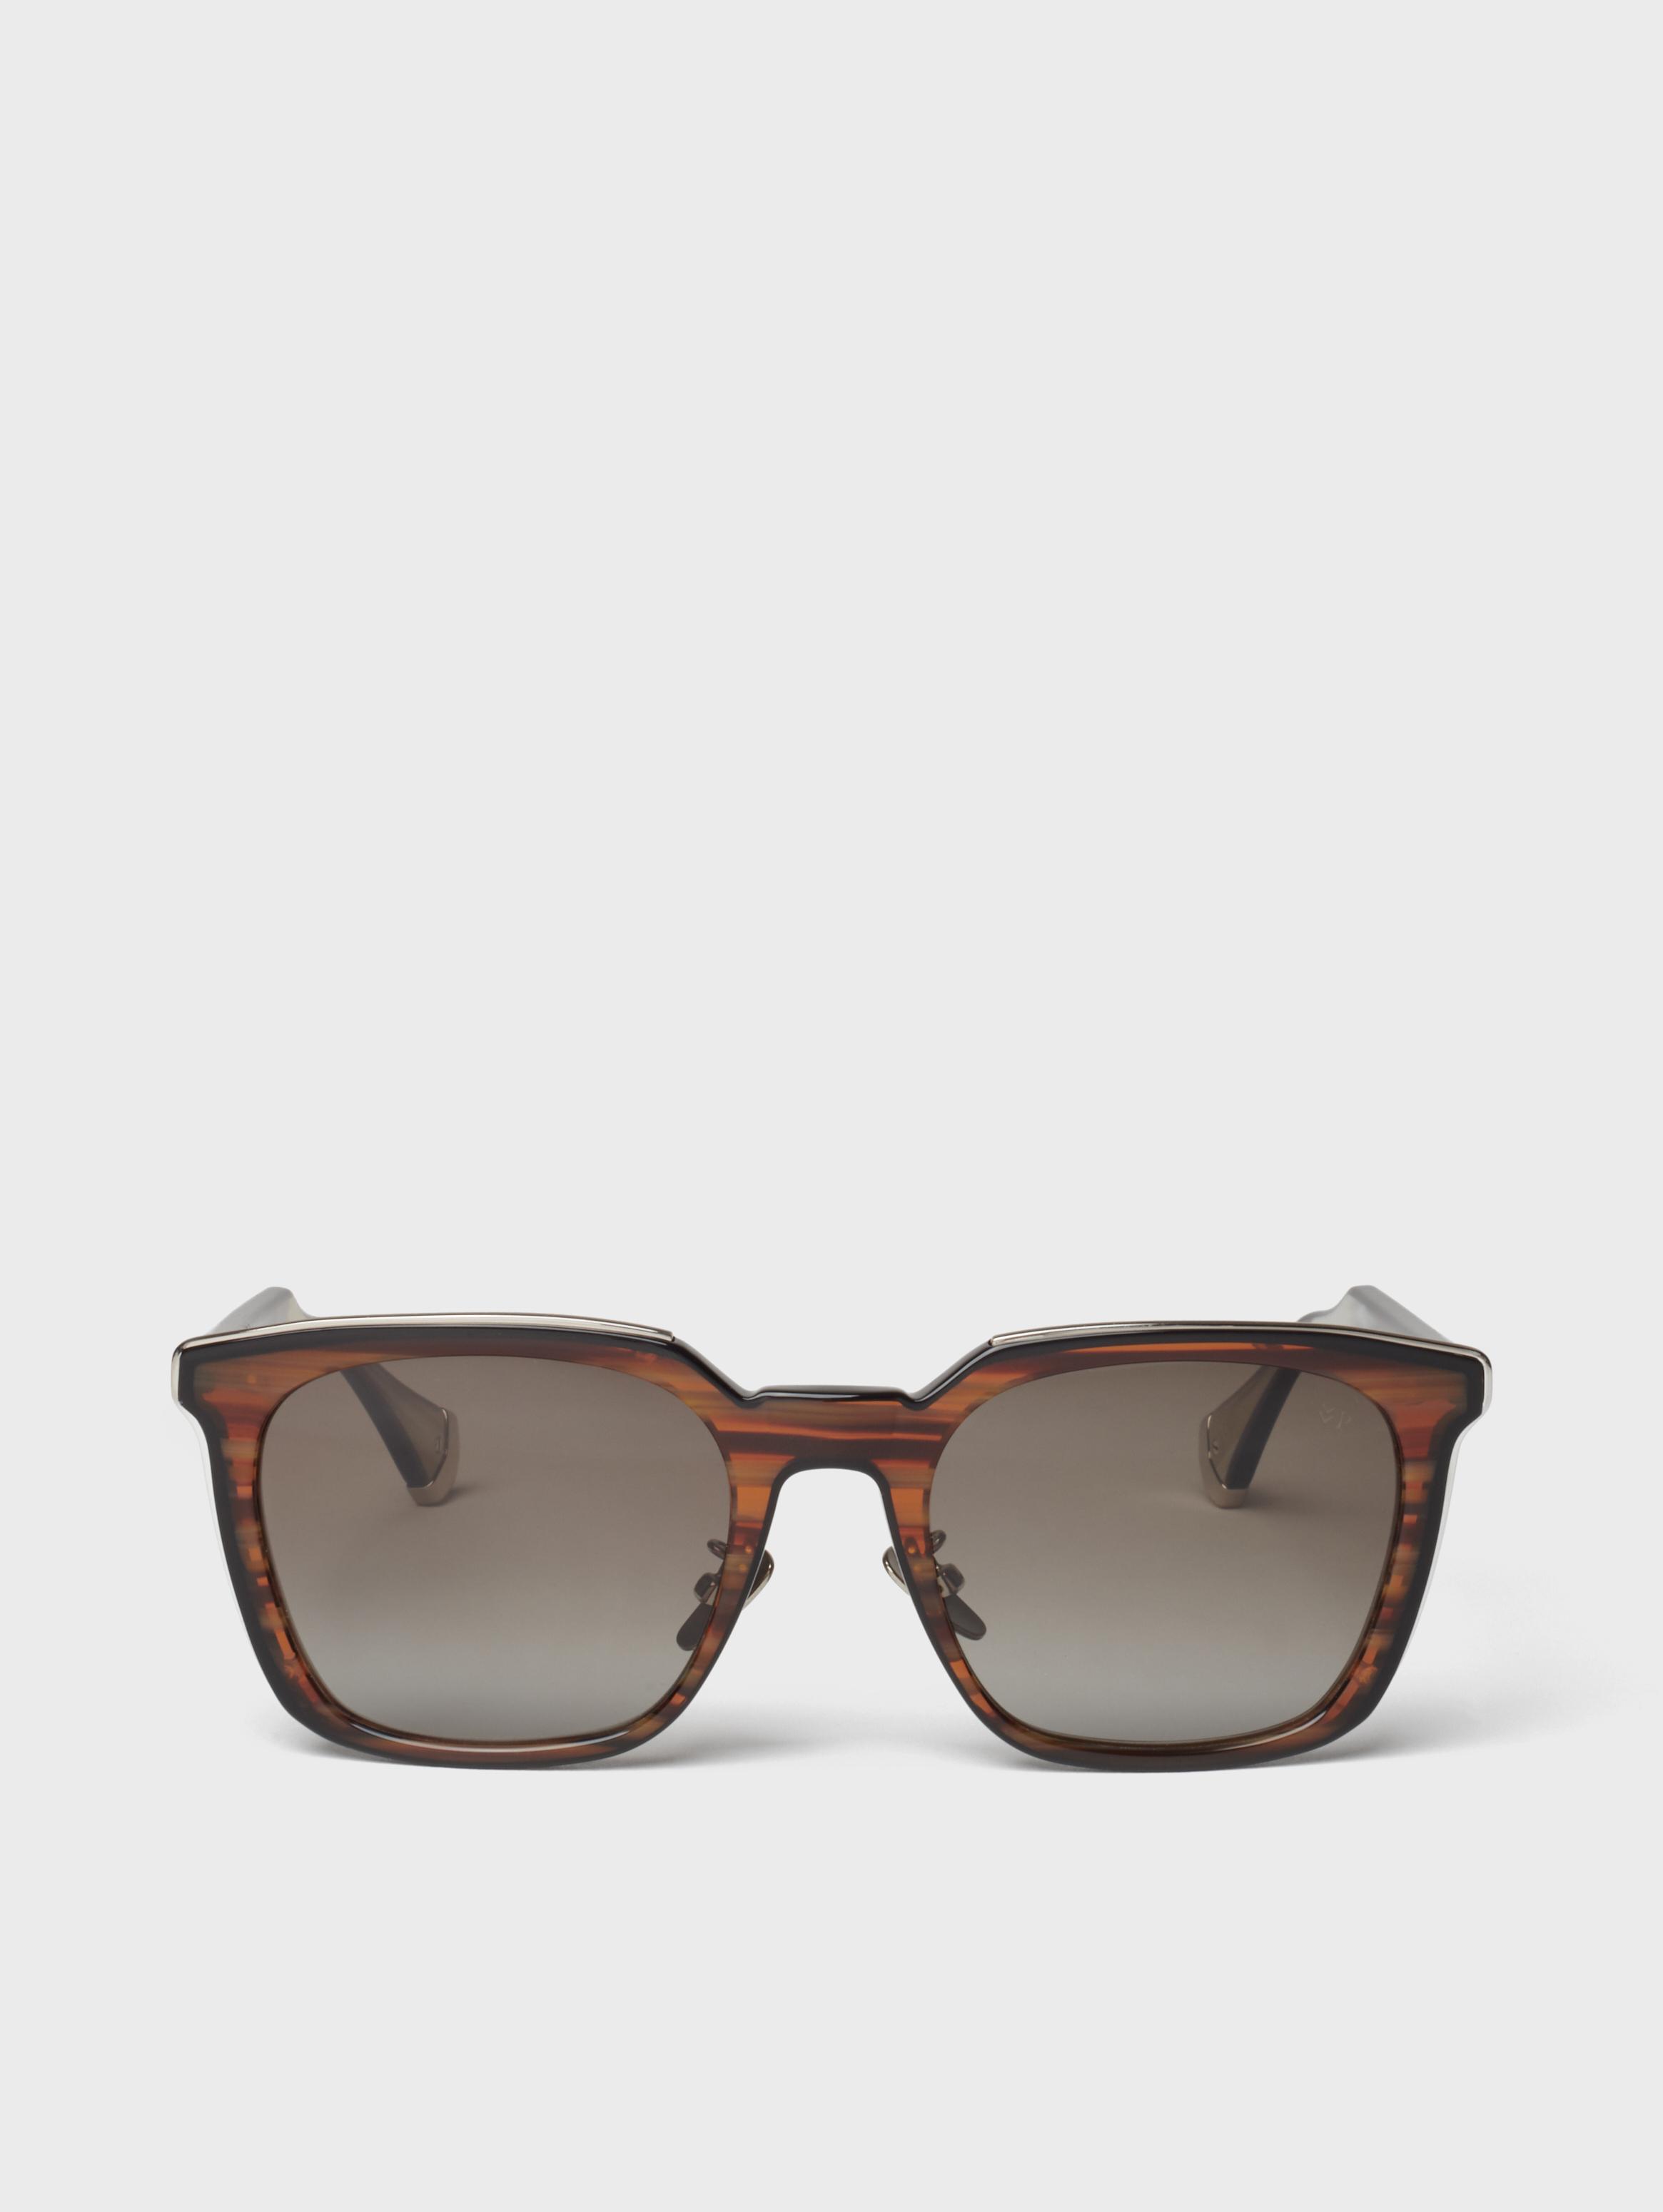 Designer Sunglasses for Men | John Varvatos